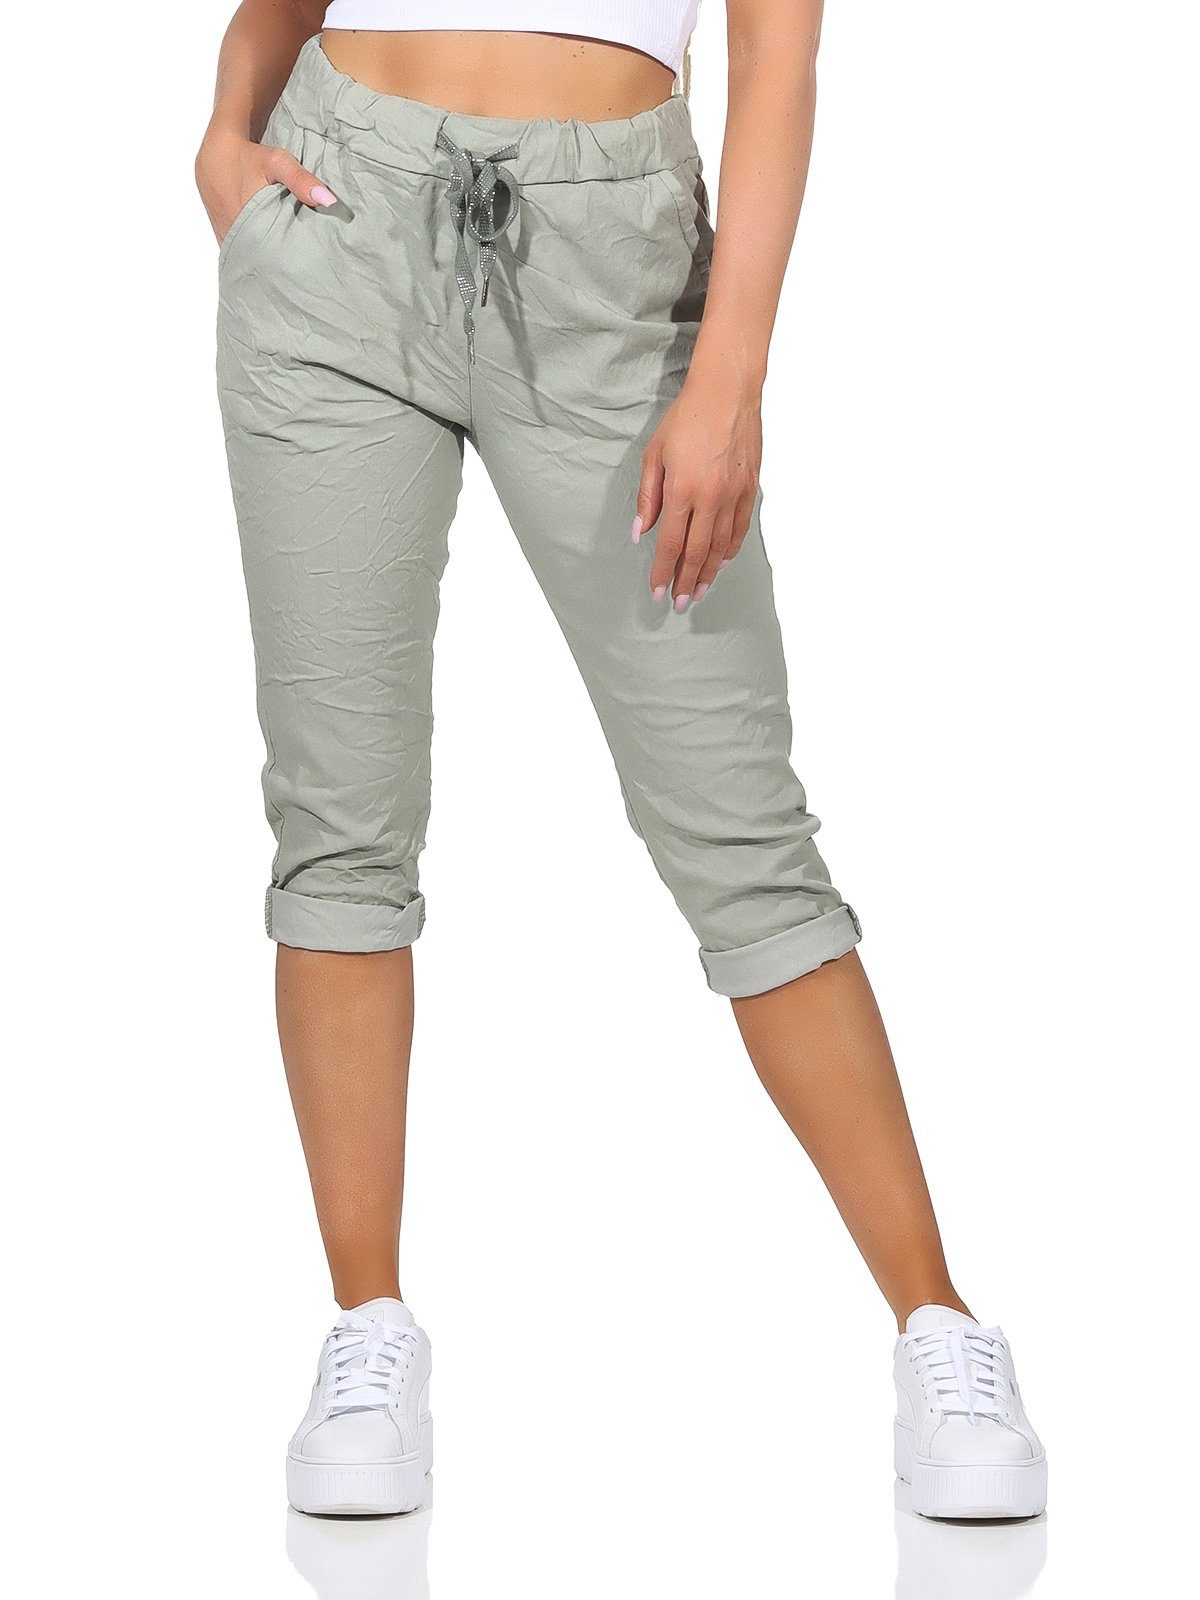 sommerlichen Kurze Khaki Damenmode Jeans in 36-44 Bermuda und Capri Farben, 7/8-Hose Taschen Sommerhose Hose Kordelzug, Aurela Damen